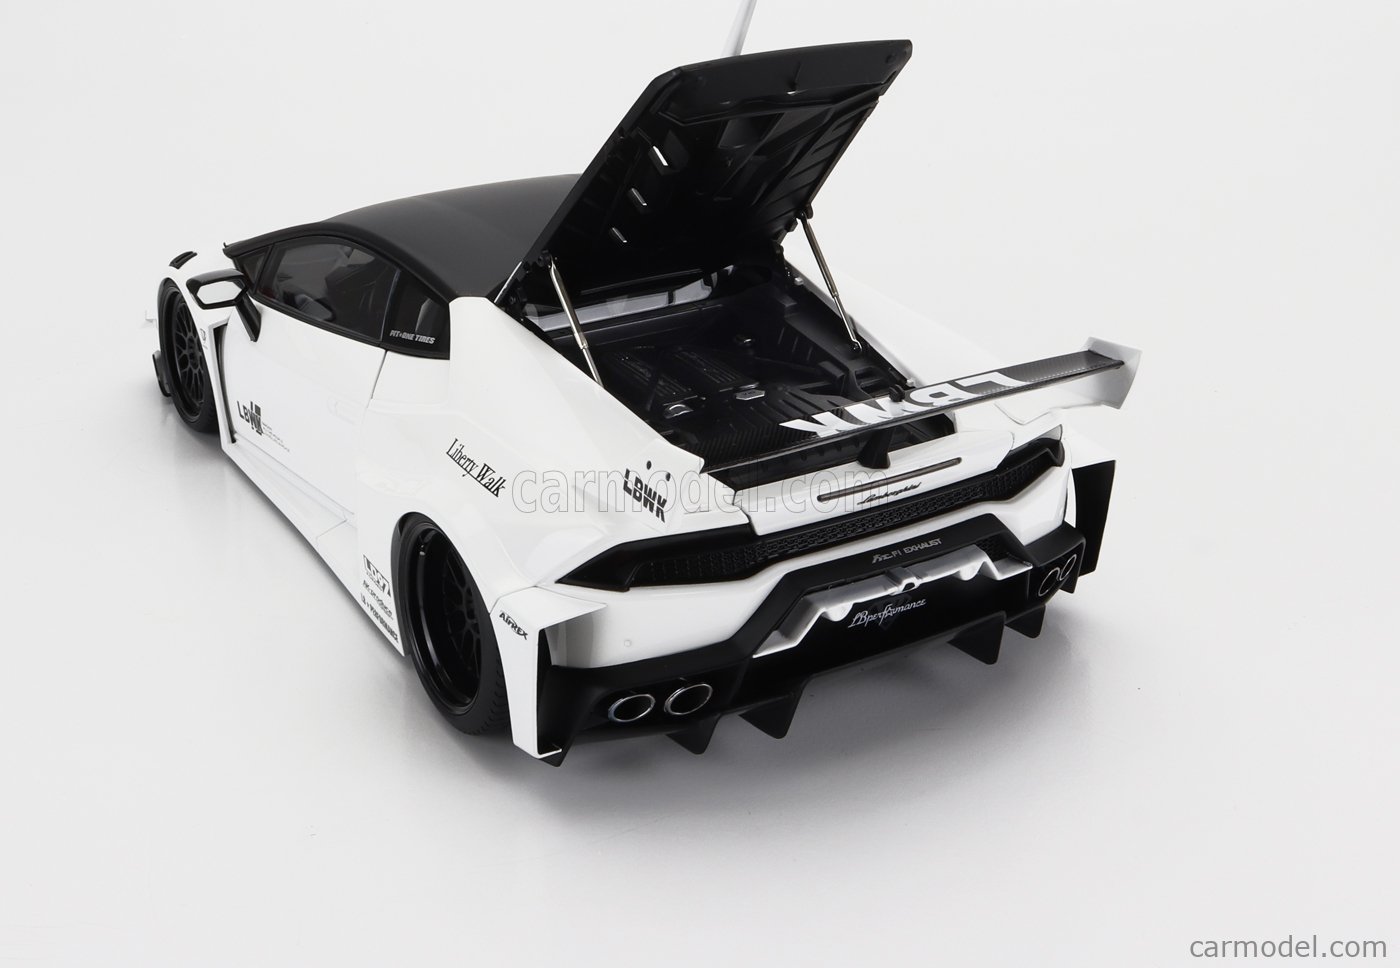 MR.BOMBASTIC: Lamborghini Huracán GT Liberty Walk von Autoart in 1